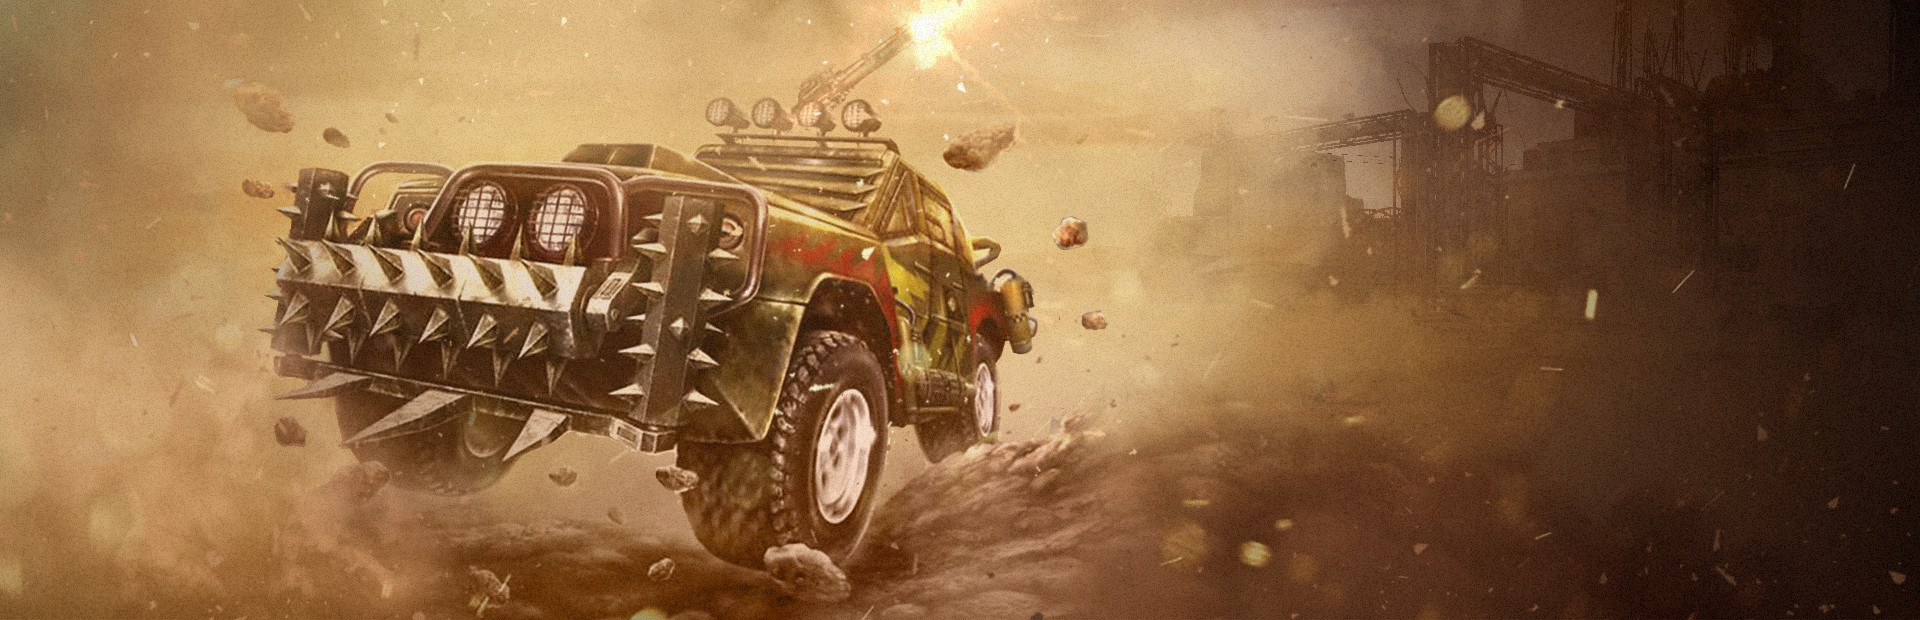 Hard Truck Apocalypse: Arcade / Ex Machina: Arcade cover image